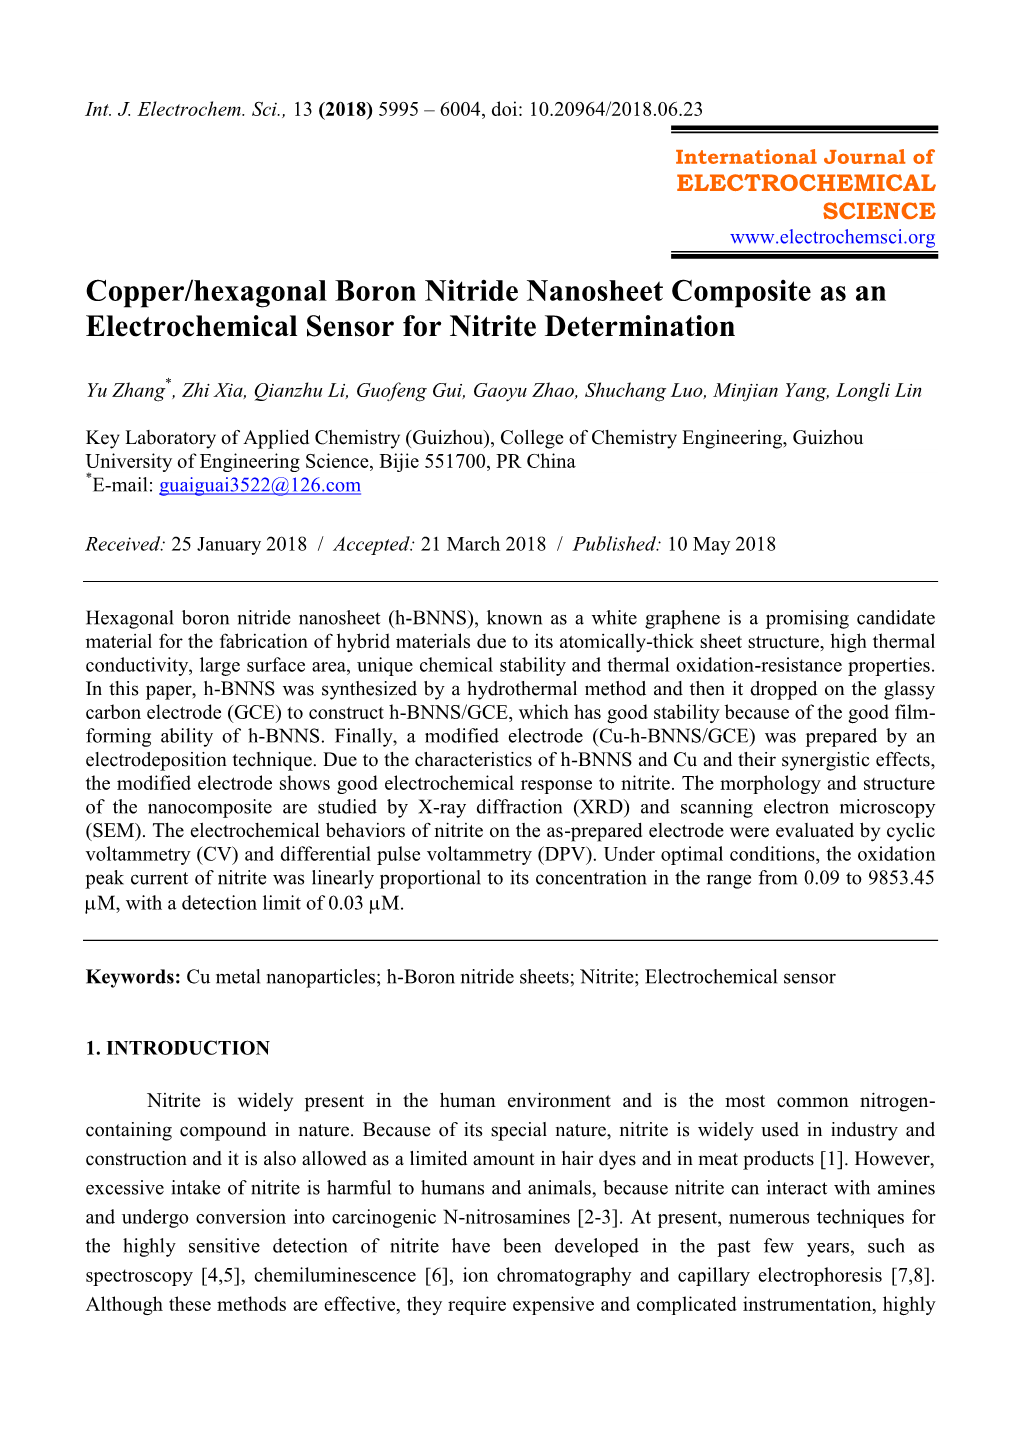 Copper/Hexagonal Boron Nitride Nanosheet Composite As an Electrochemical Sensor for Nitrite Determination